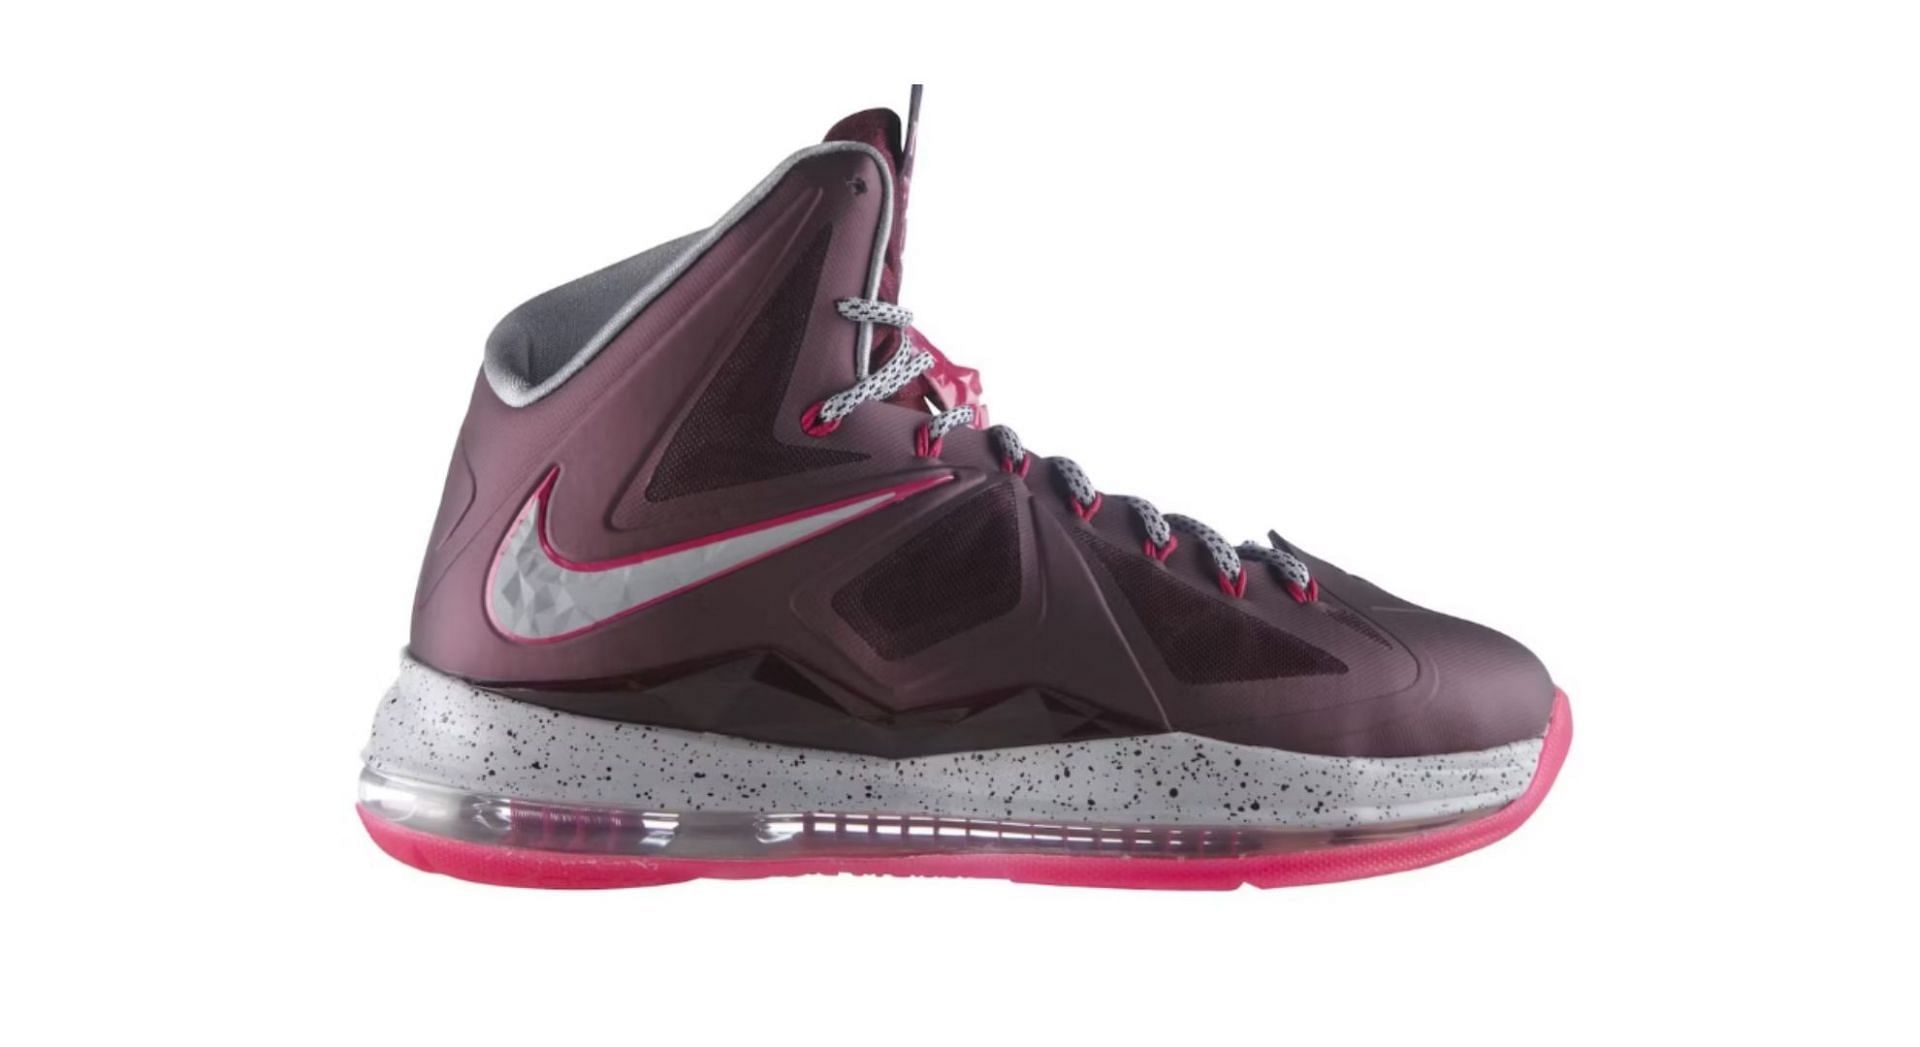 Nike LeBron X SP Crown Jewel Fireberry (Image via Stock X)